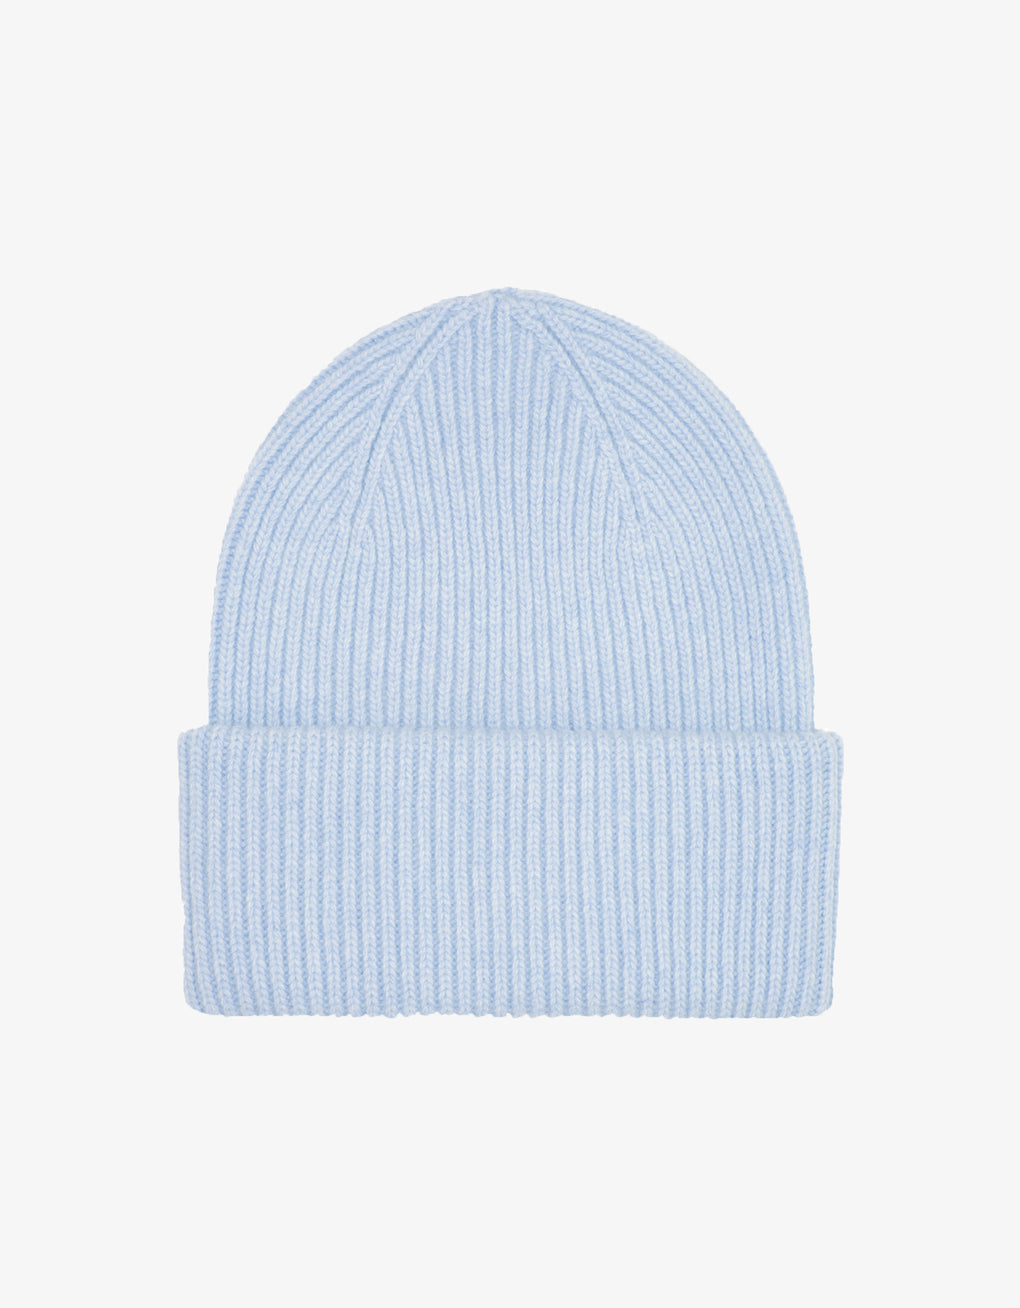 Merino wool hat - polar blue